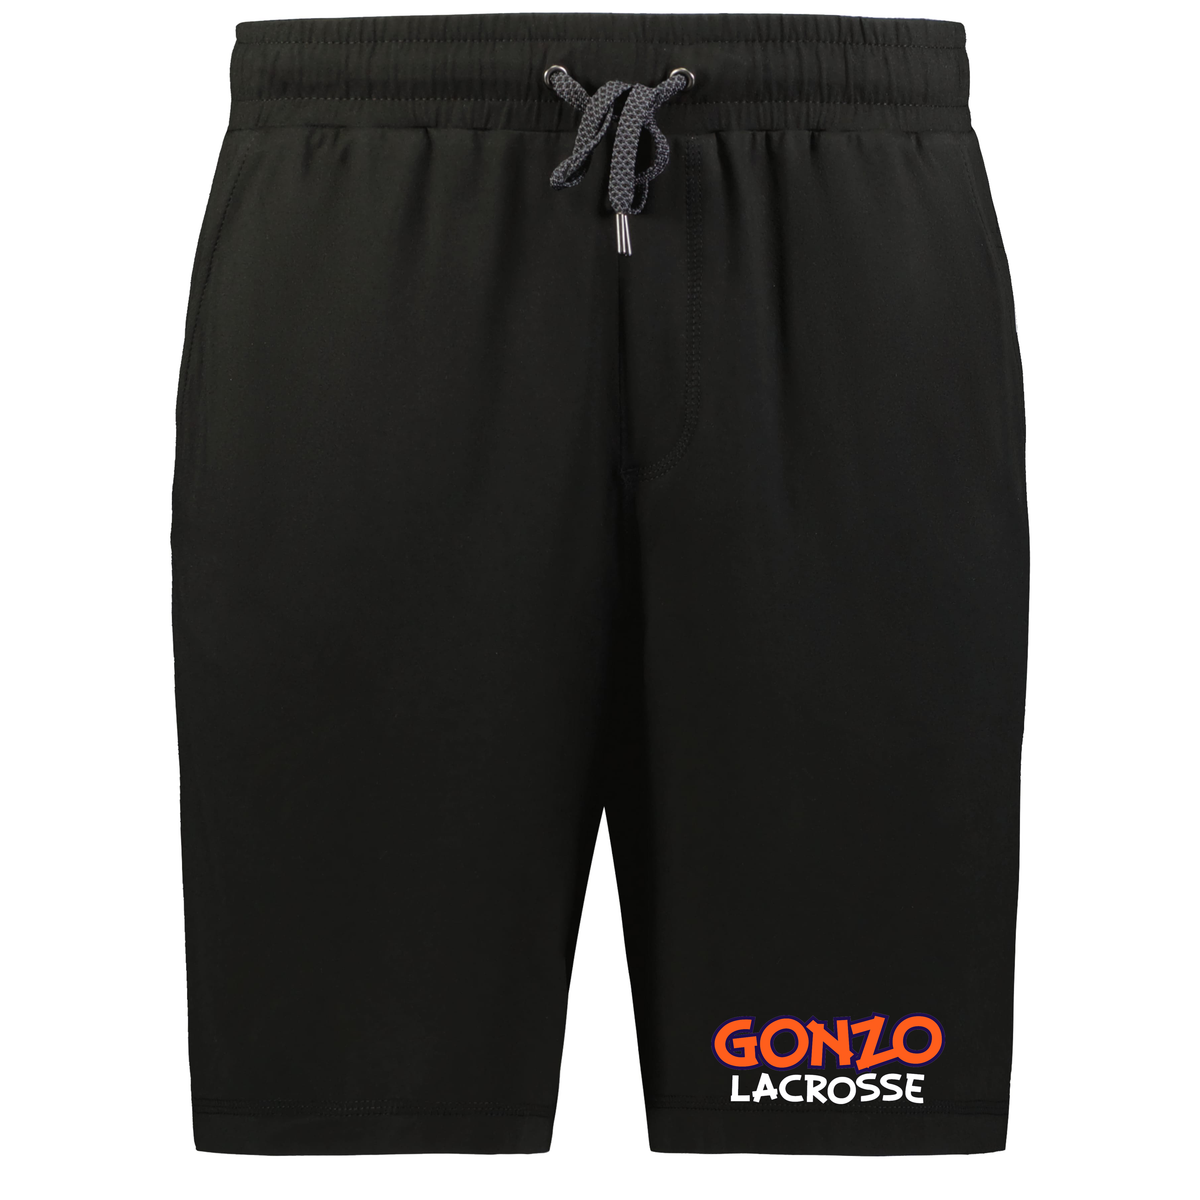 Gonzo Lacrosse Ventura Soft Knit Shorts